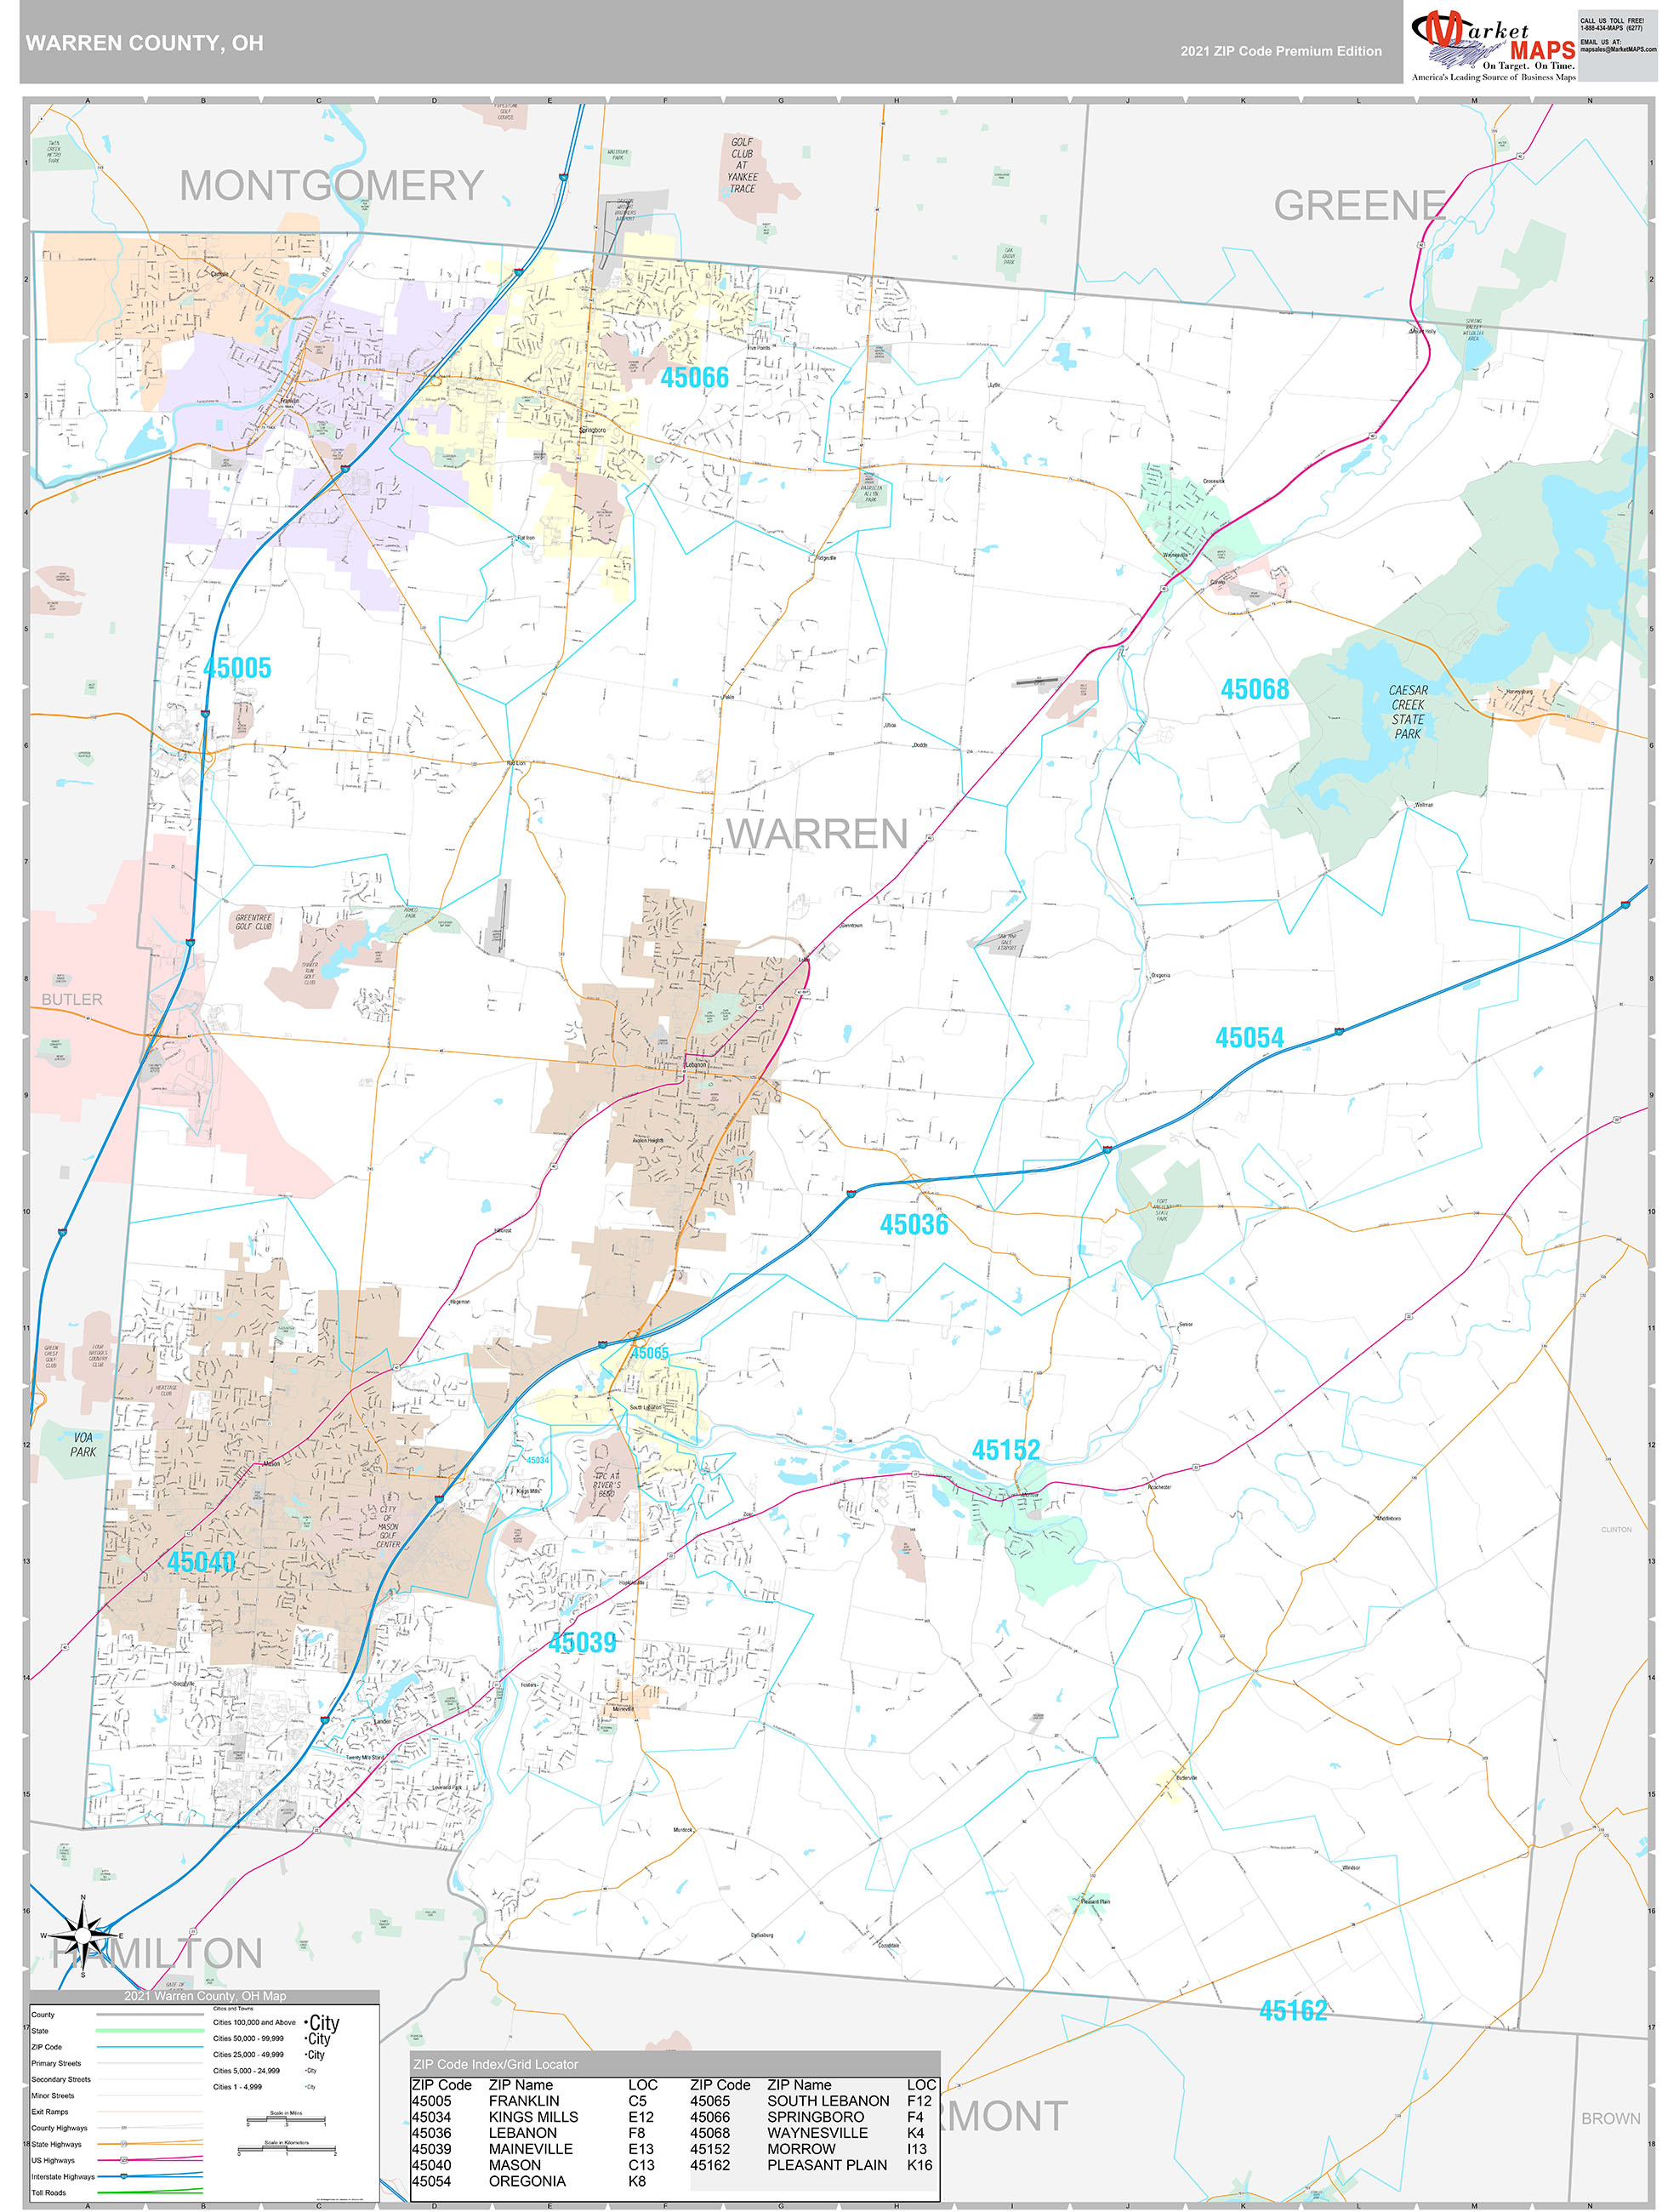 Warren County, OH Wall Map Premium Style by MarketMAPS - MapSales